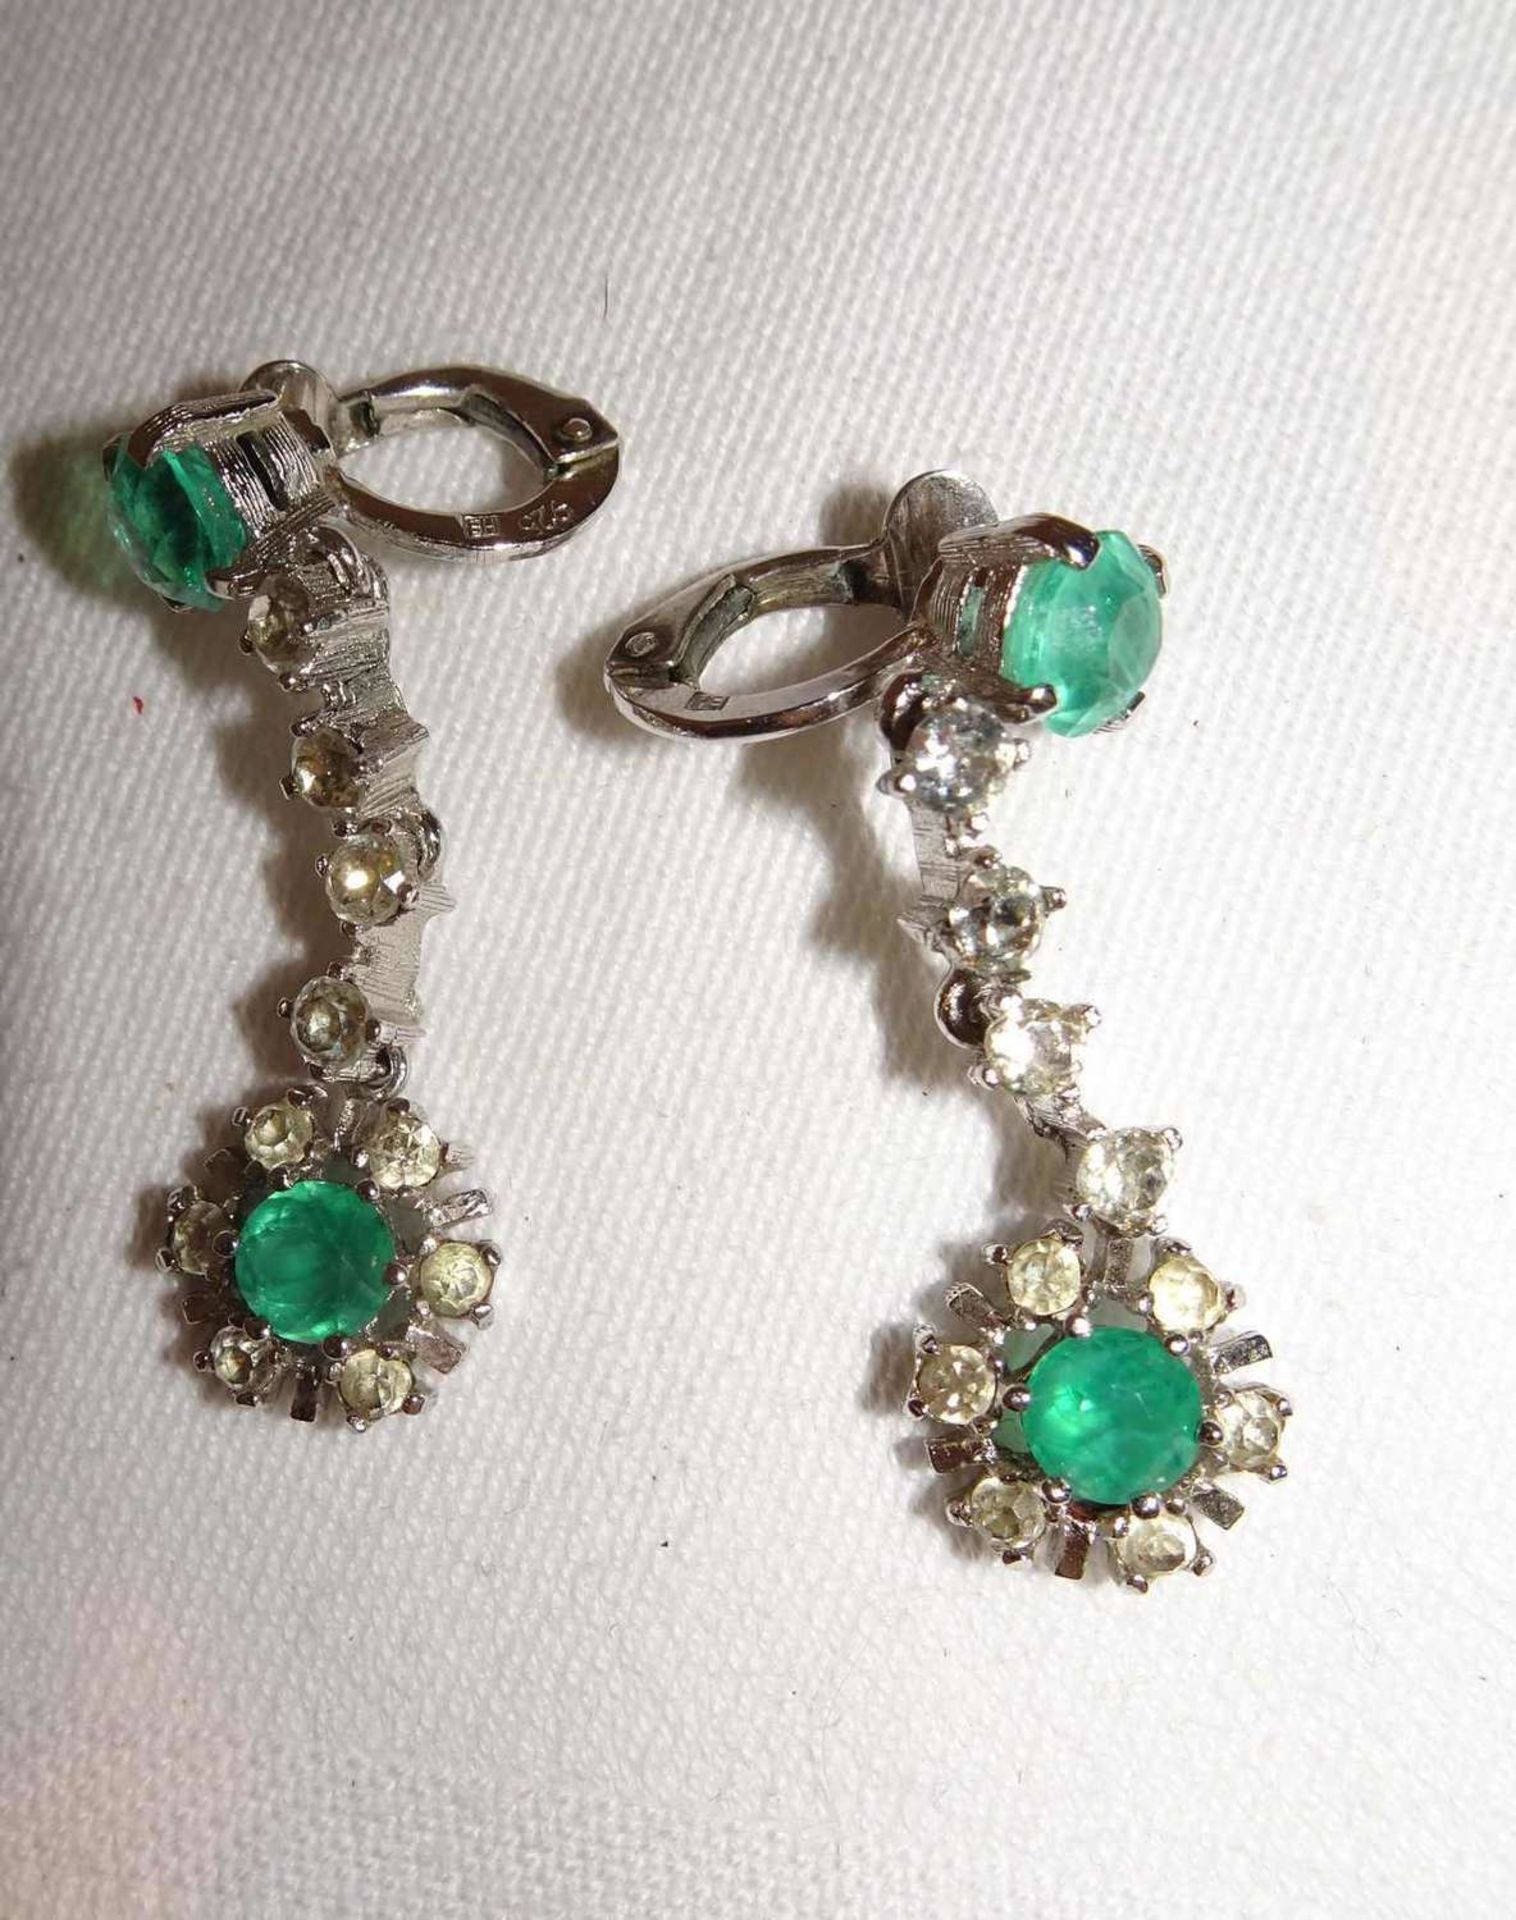 1 Paar Ohrclips, 925er Silber, besetzt mit grünen Glassteinen. Gesamtgewicht ca. 7,5 gr. 1 pair of